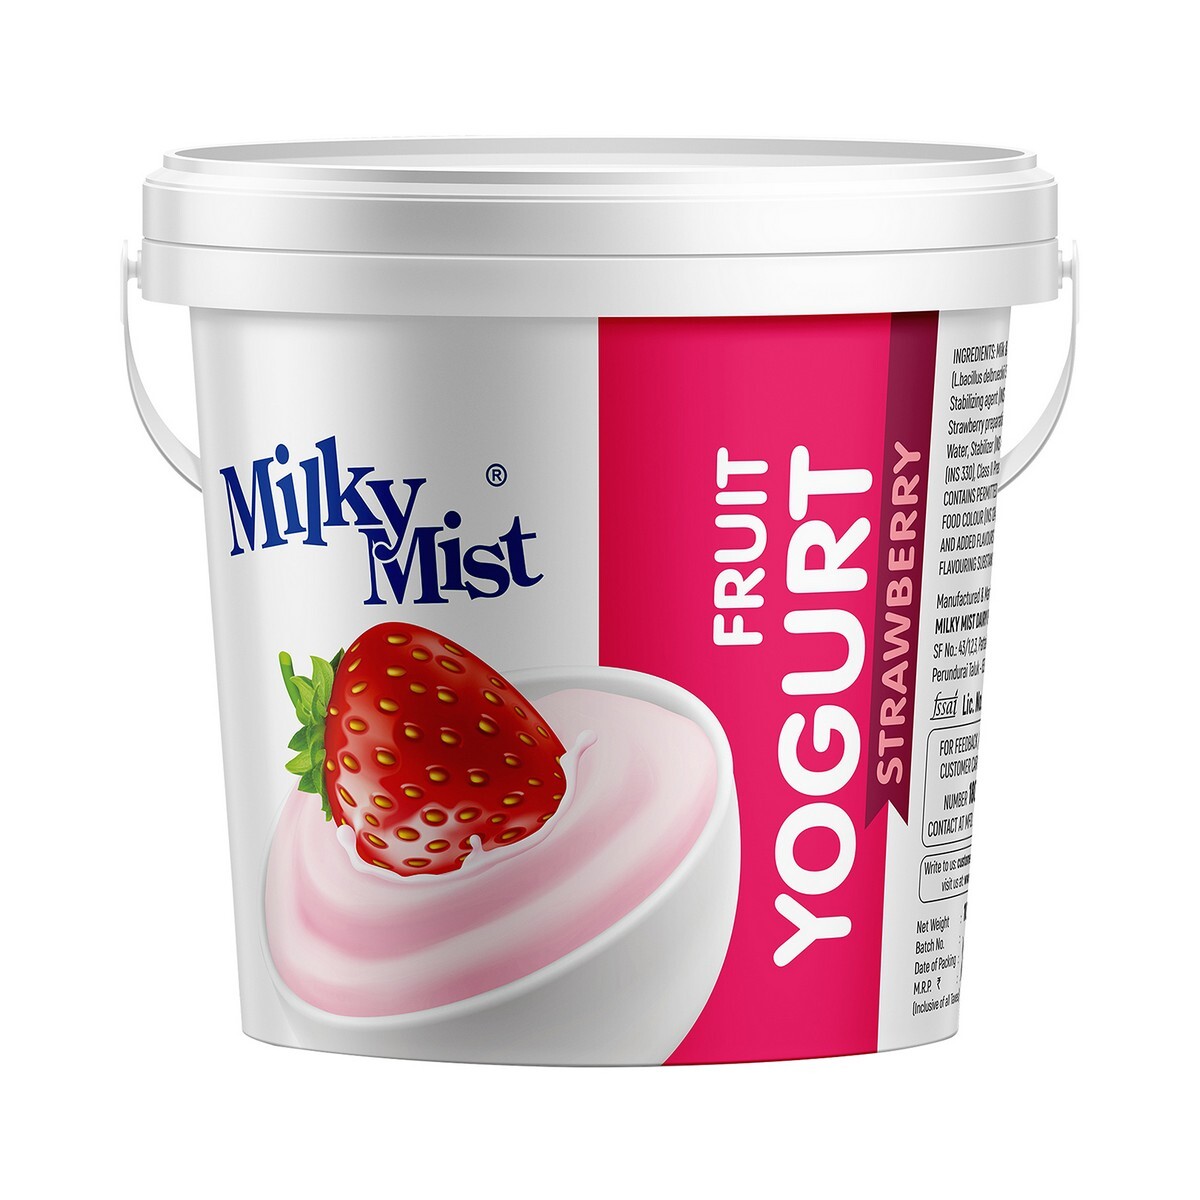 Milky Mist Stirred Fruit Yoghurt Strawberry 1Kg